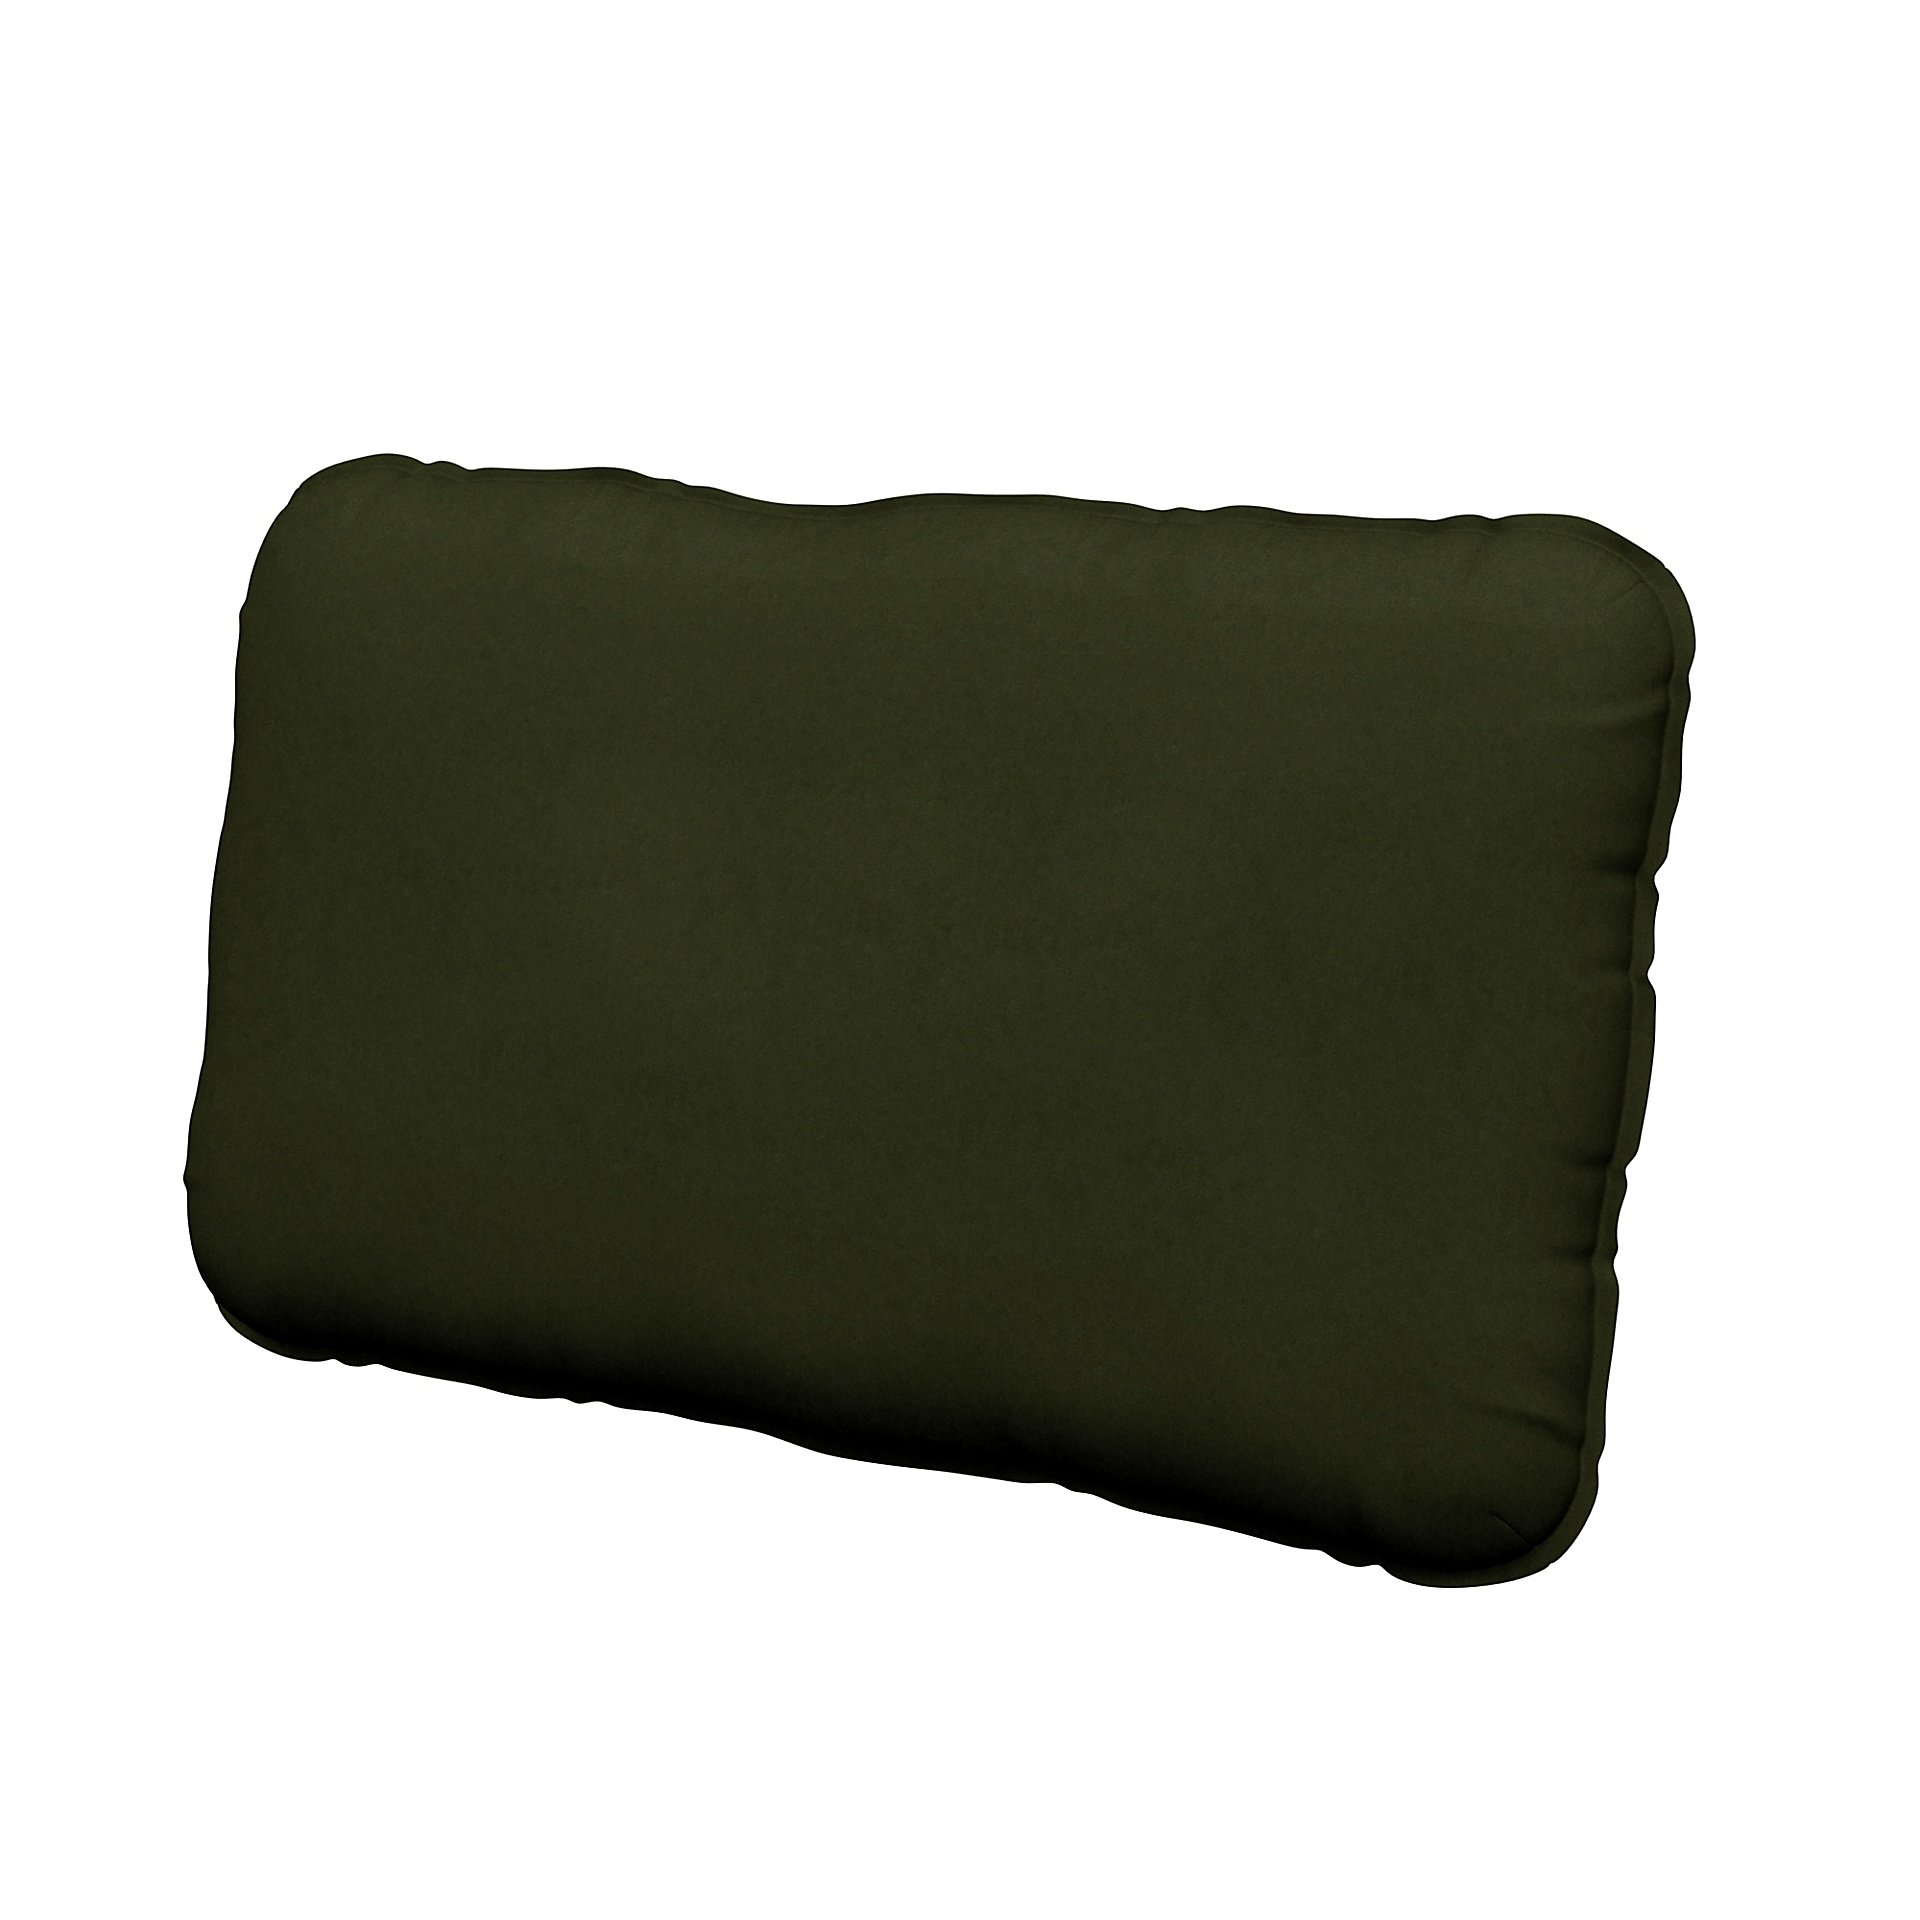 IKEA - Vallentuna back cushion cover 40x75cm, Moss, Velvet - Bemz